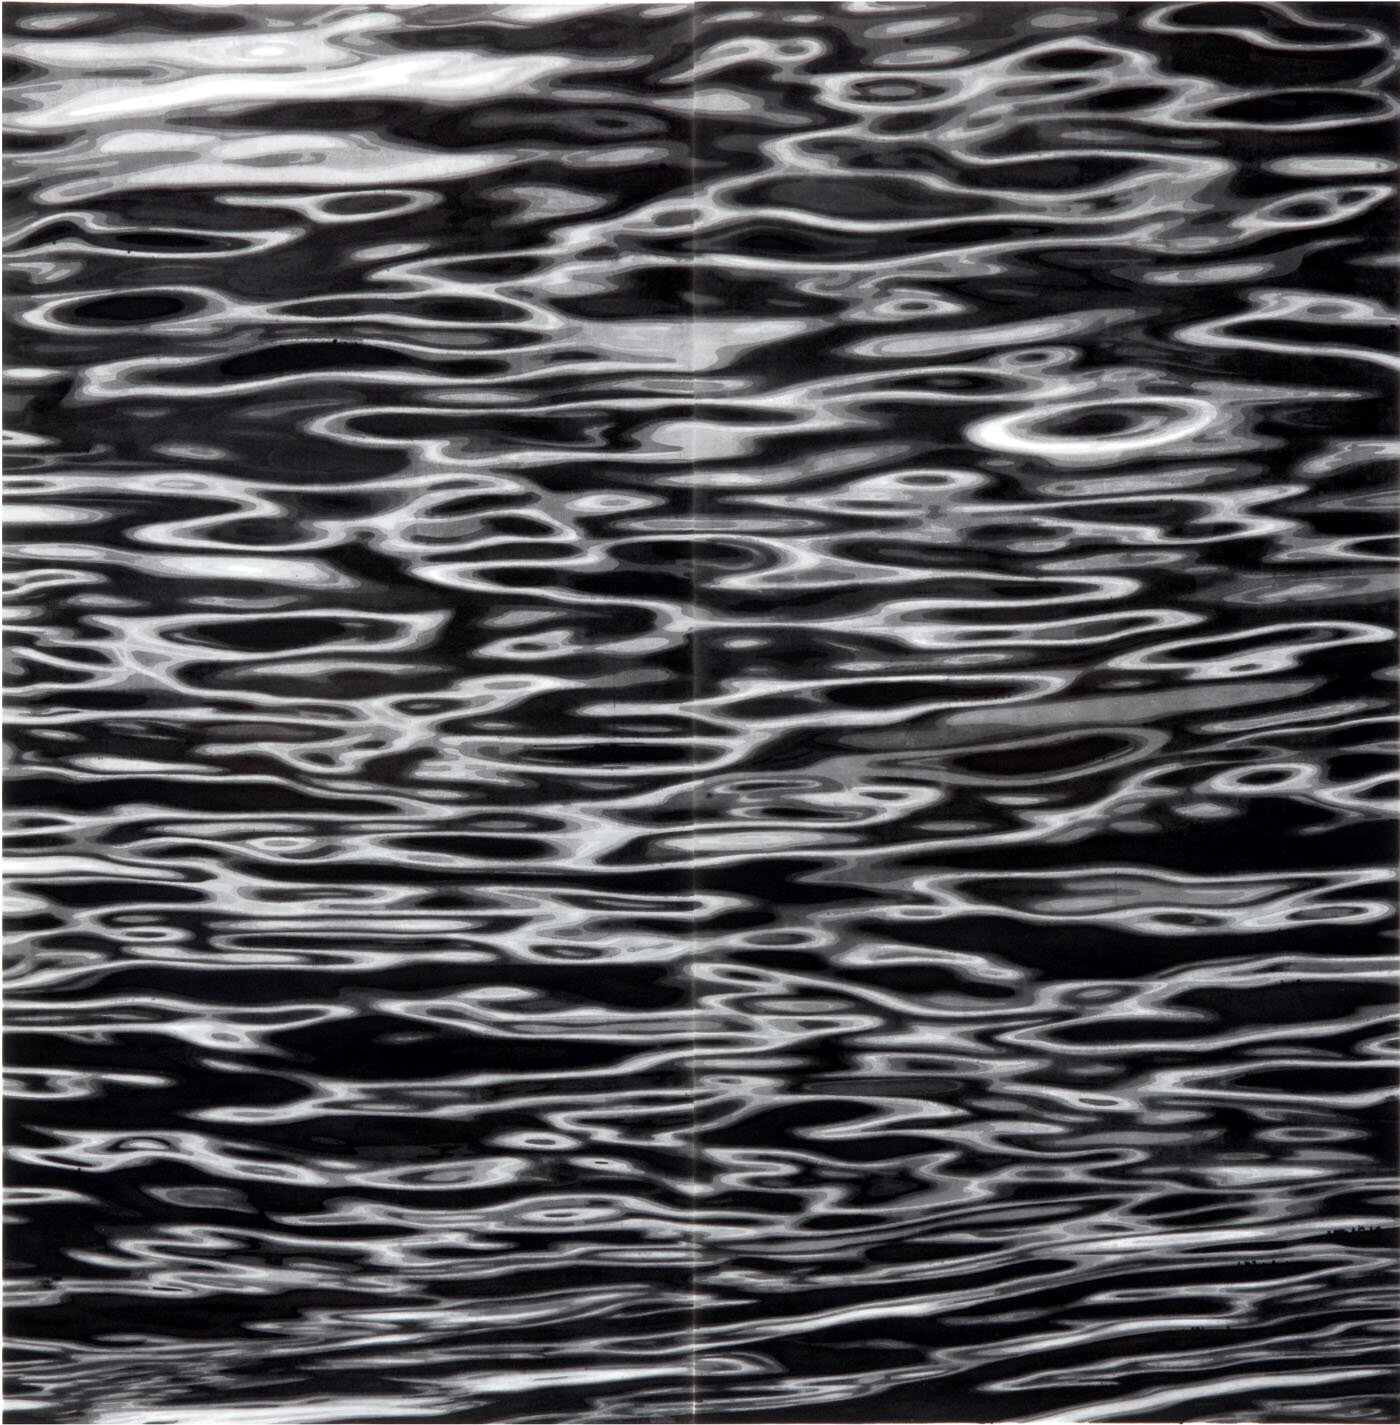 WaterNO.8-240x240cm-CHENQi-2010.jpg